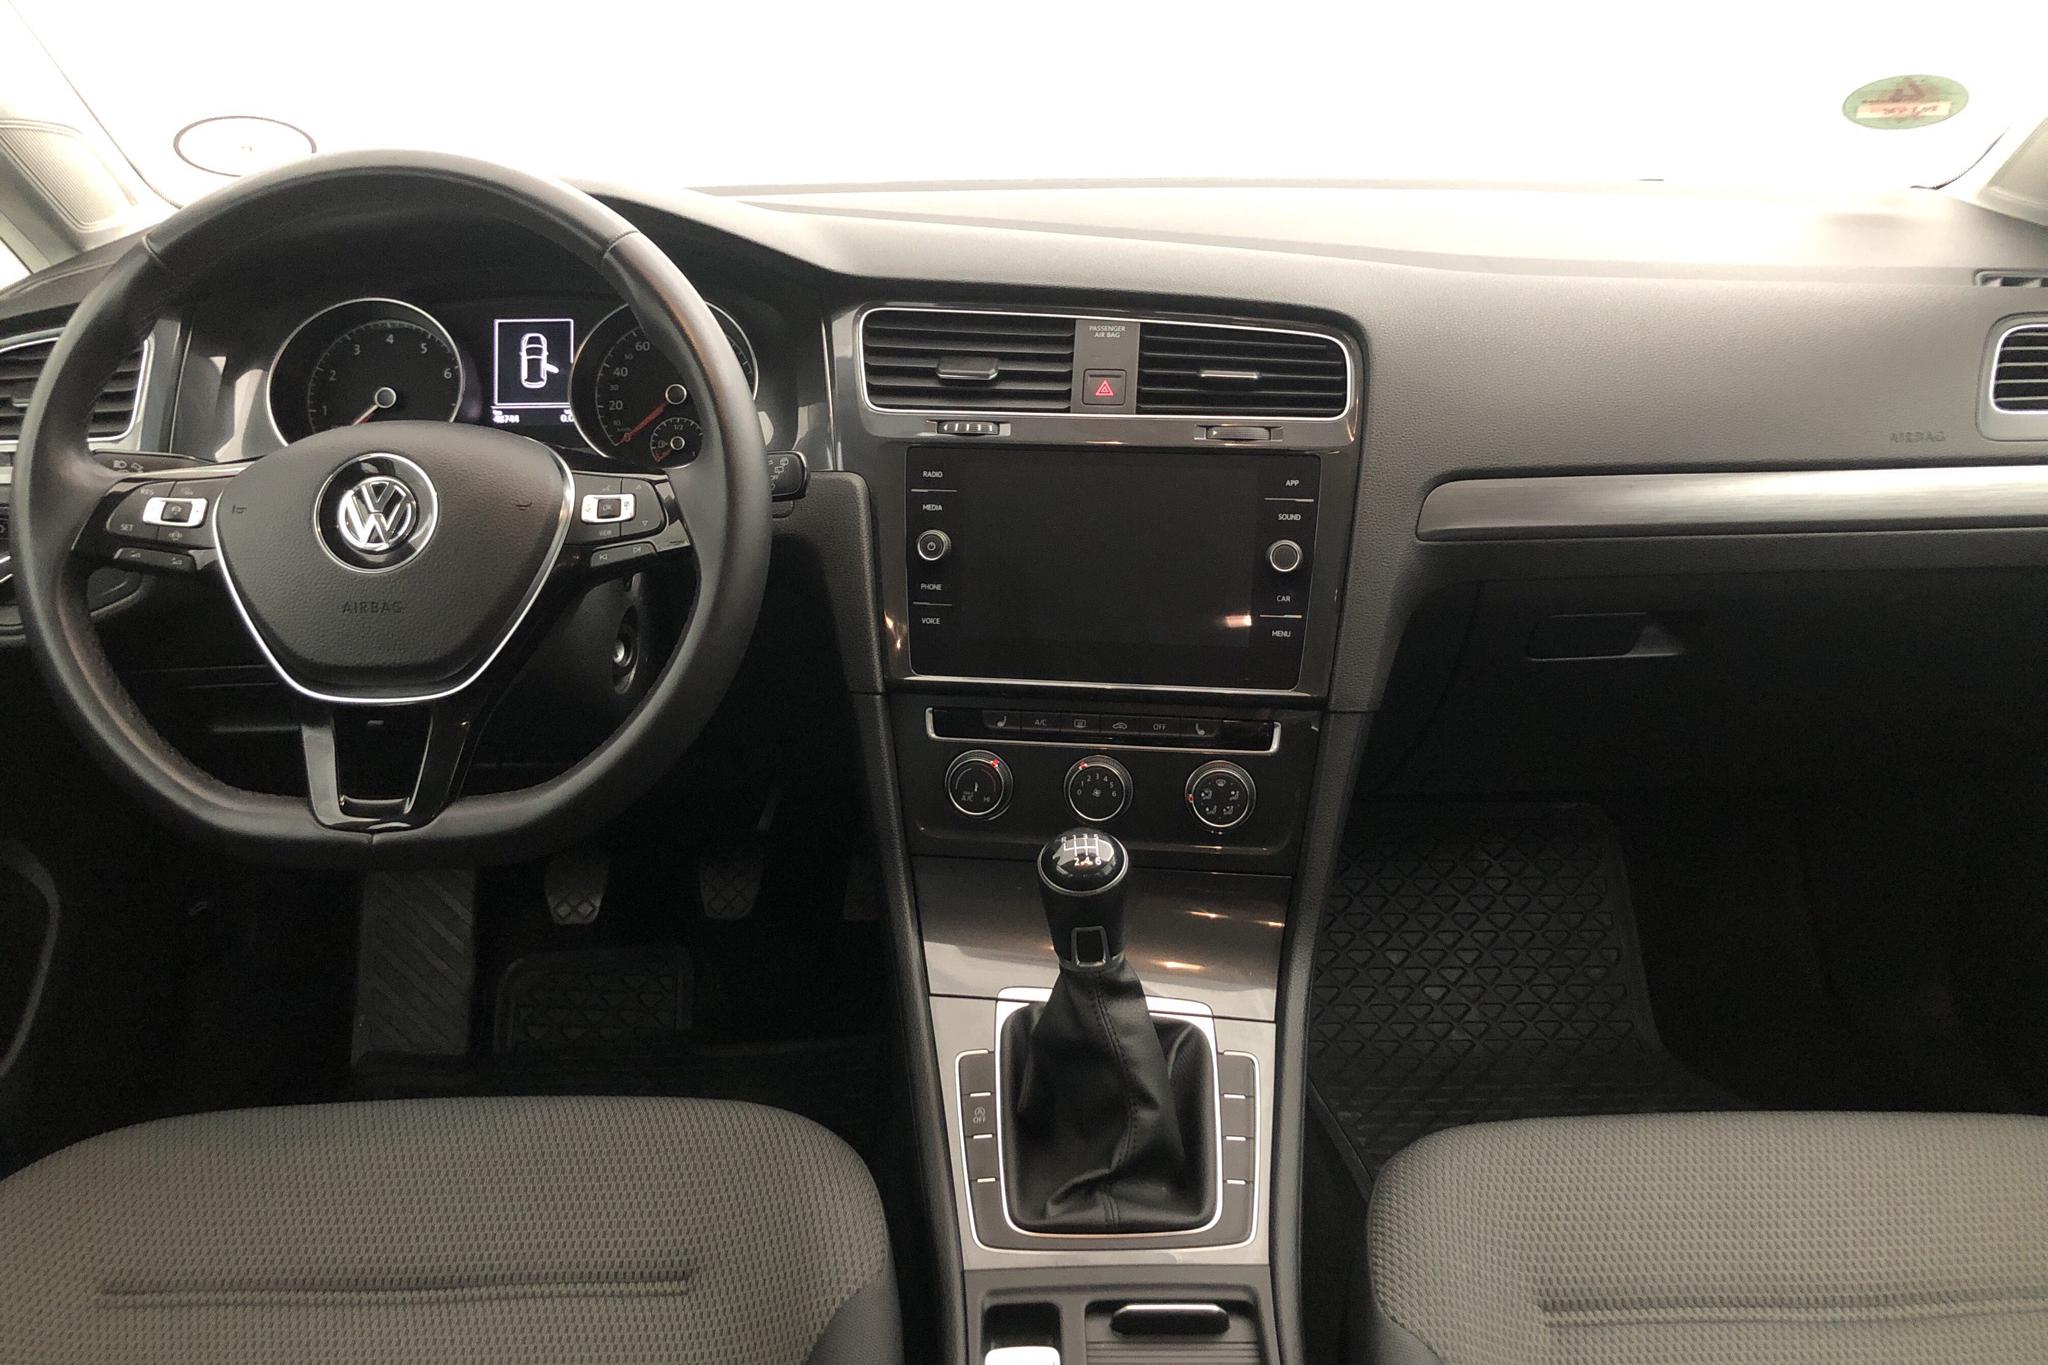 VW Golf VII 1.0 TSI 5dr (115hk) - 4 874 mil - Manuell - silver - 2019